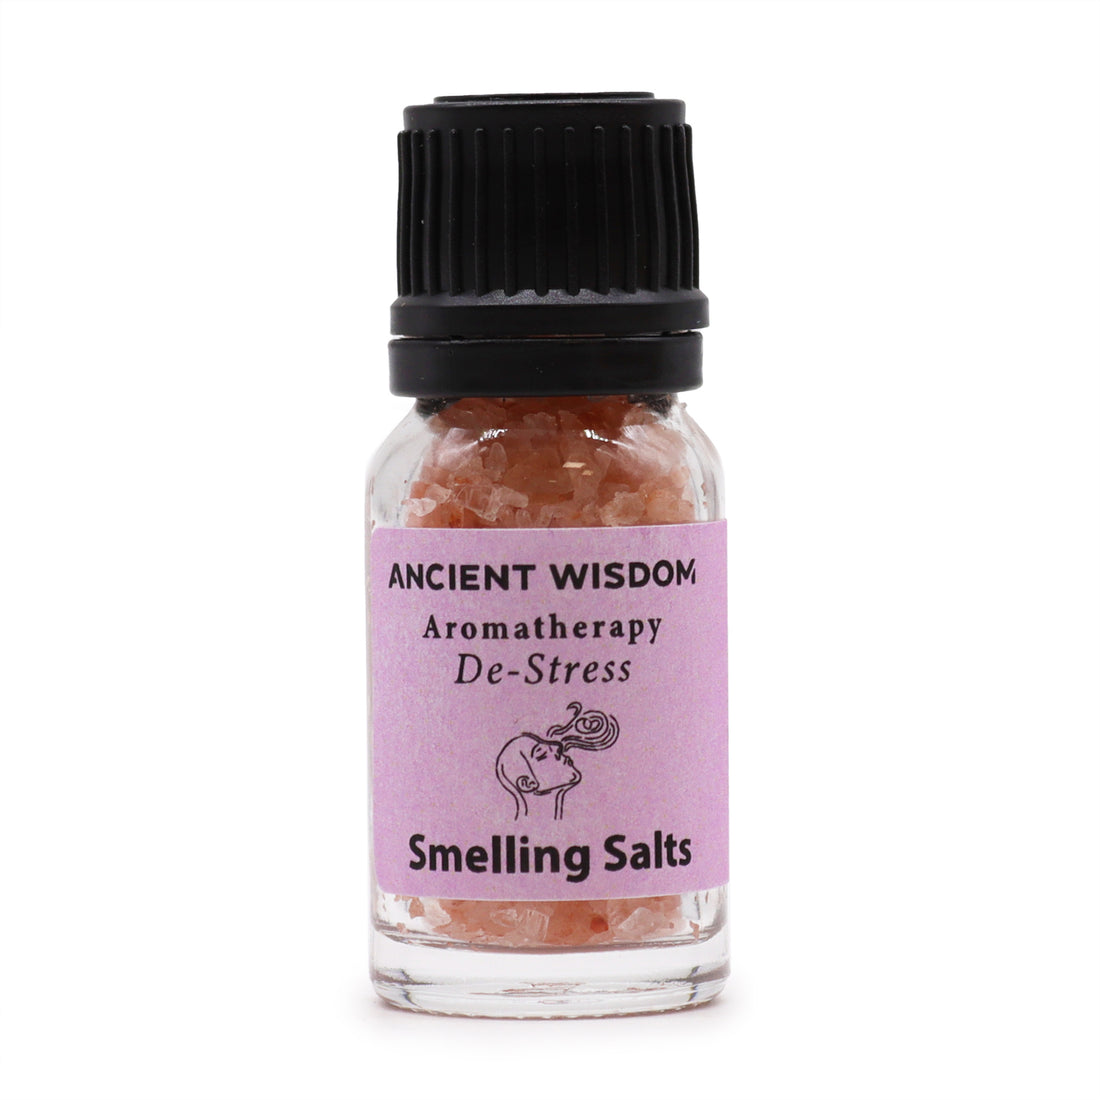 De-Stress Aromatherapy Smelling Salt